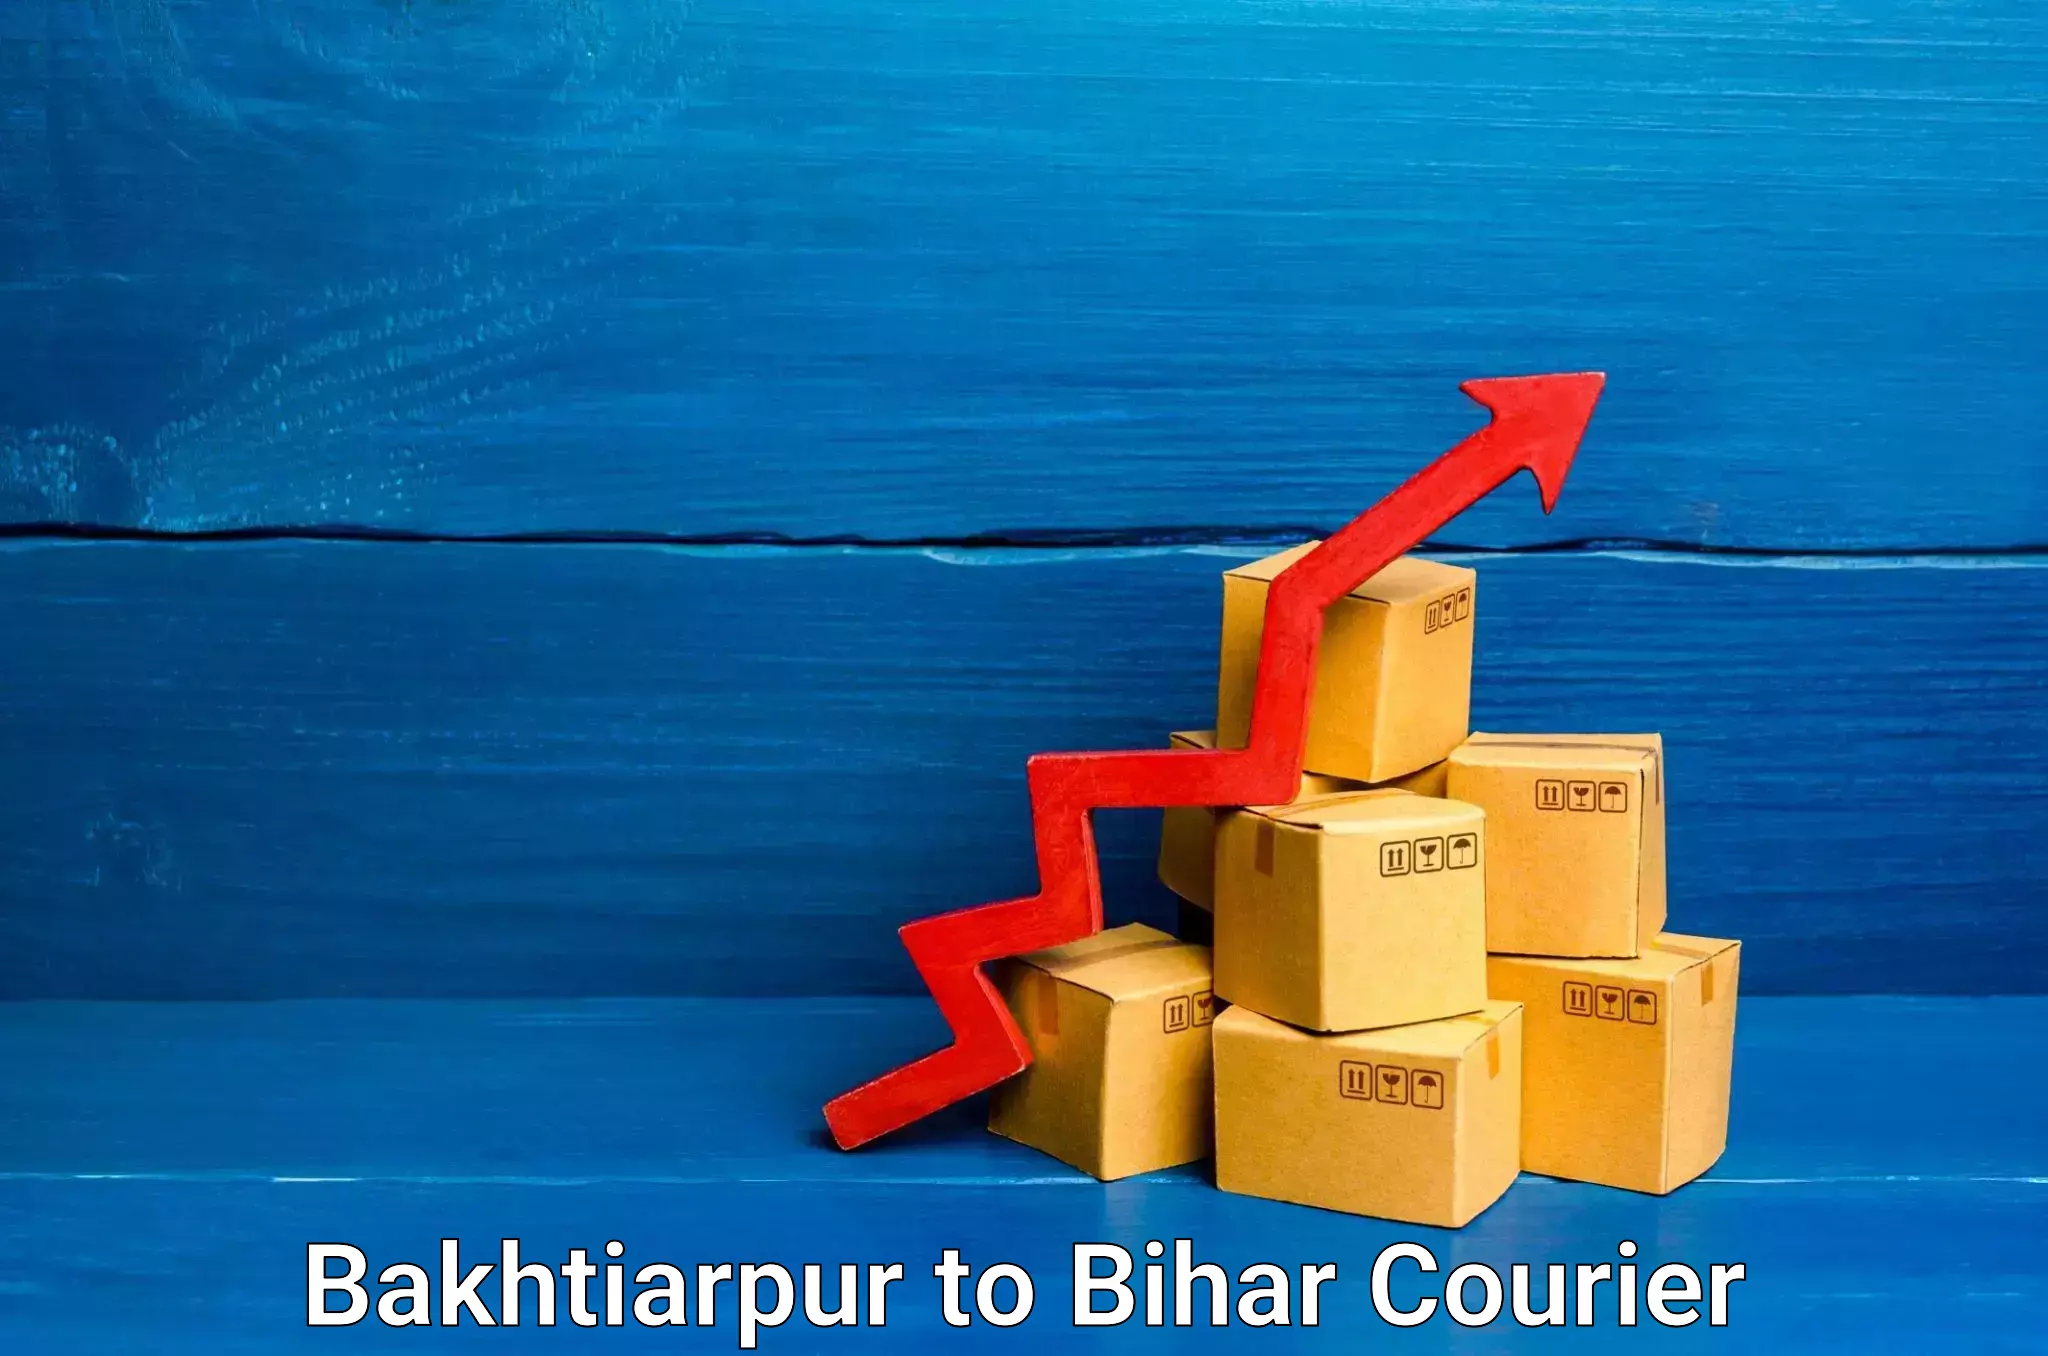 Furniture moving specialists Bakhtiarpur to Bihar